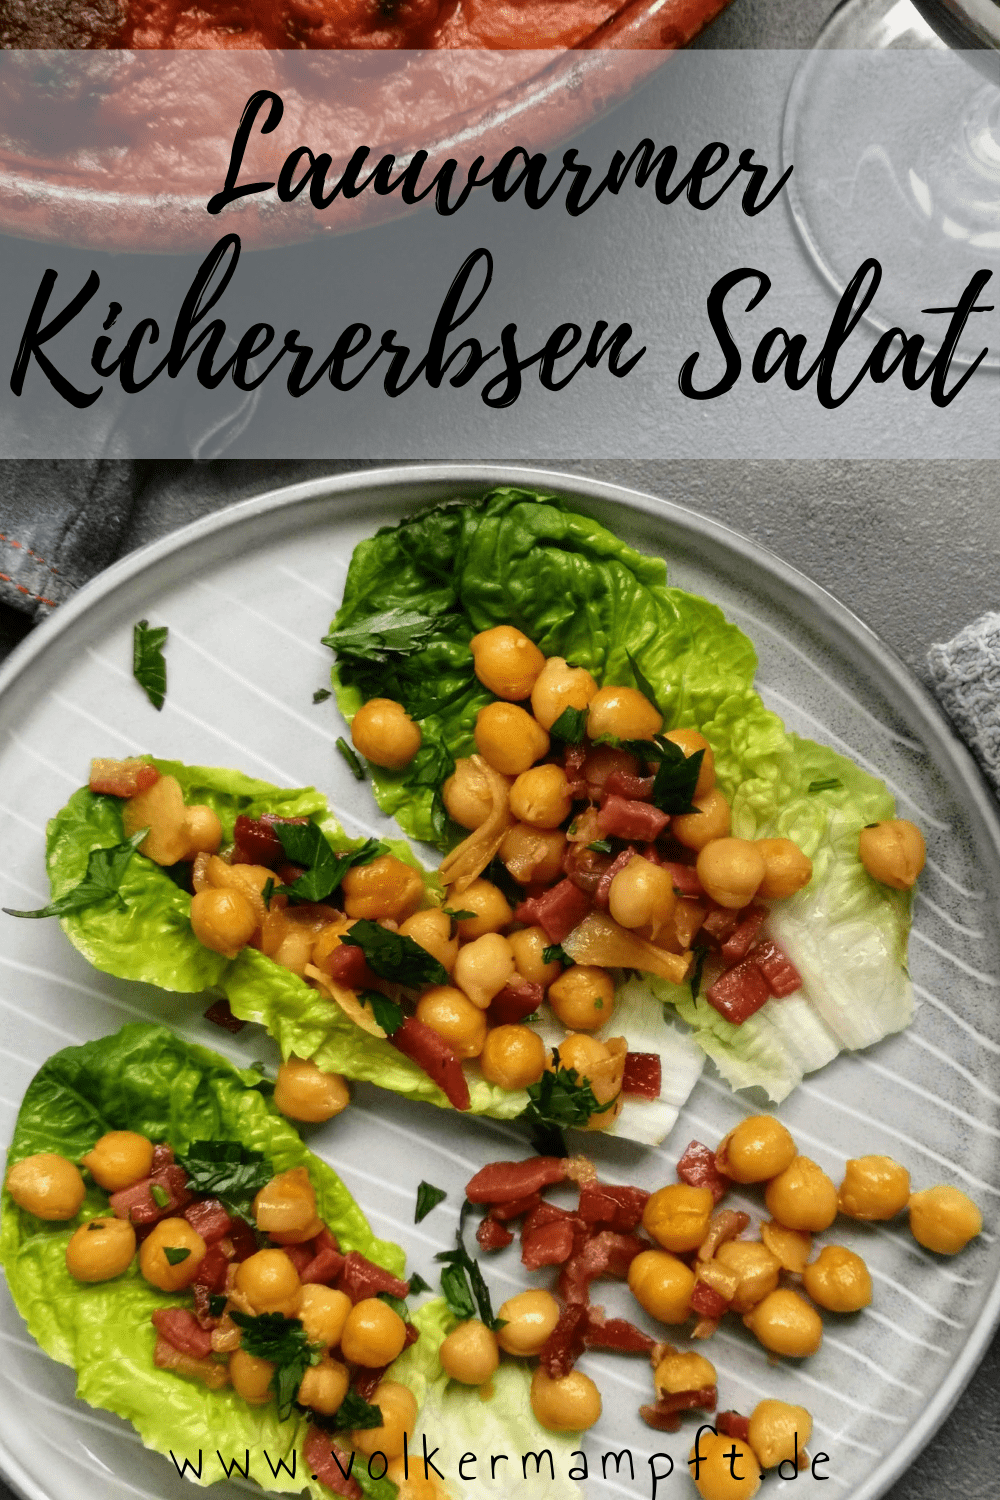 Pinterest - Lauwarmer Kichererbsen Salat mit Serano